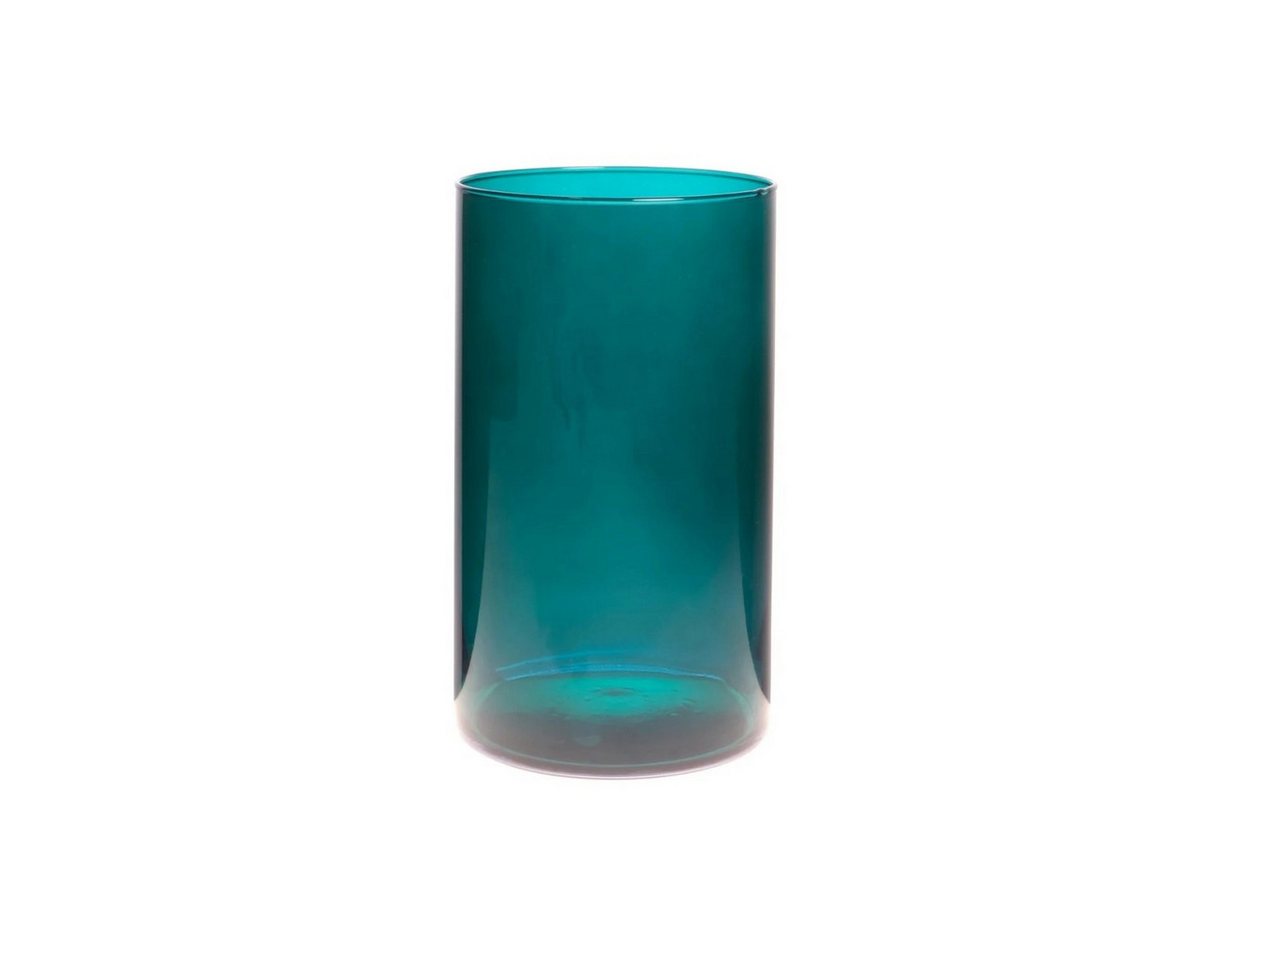 Hakbijl Glass Deko-Glas, Blau H:29cm D:16cm Glas von Hakbijl Glass